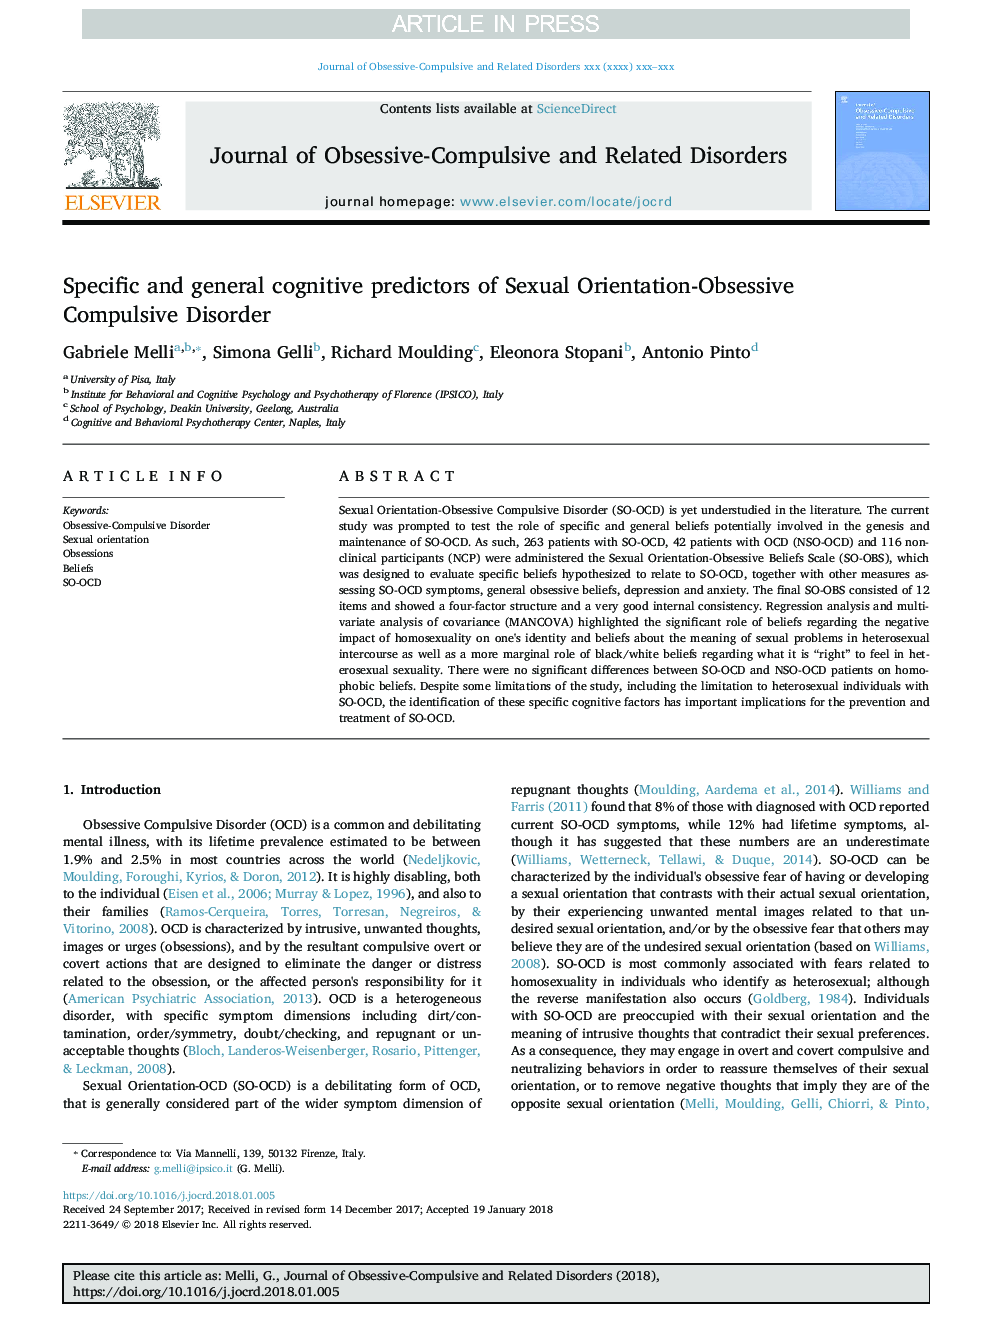 Specific and general cognitive predictors of Sexual Orientation-Obsessive Compulsive Disorder